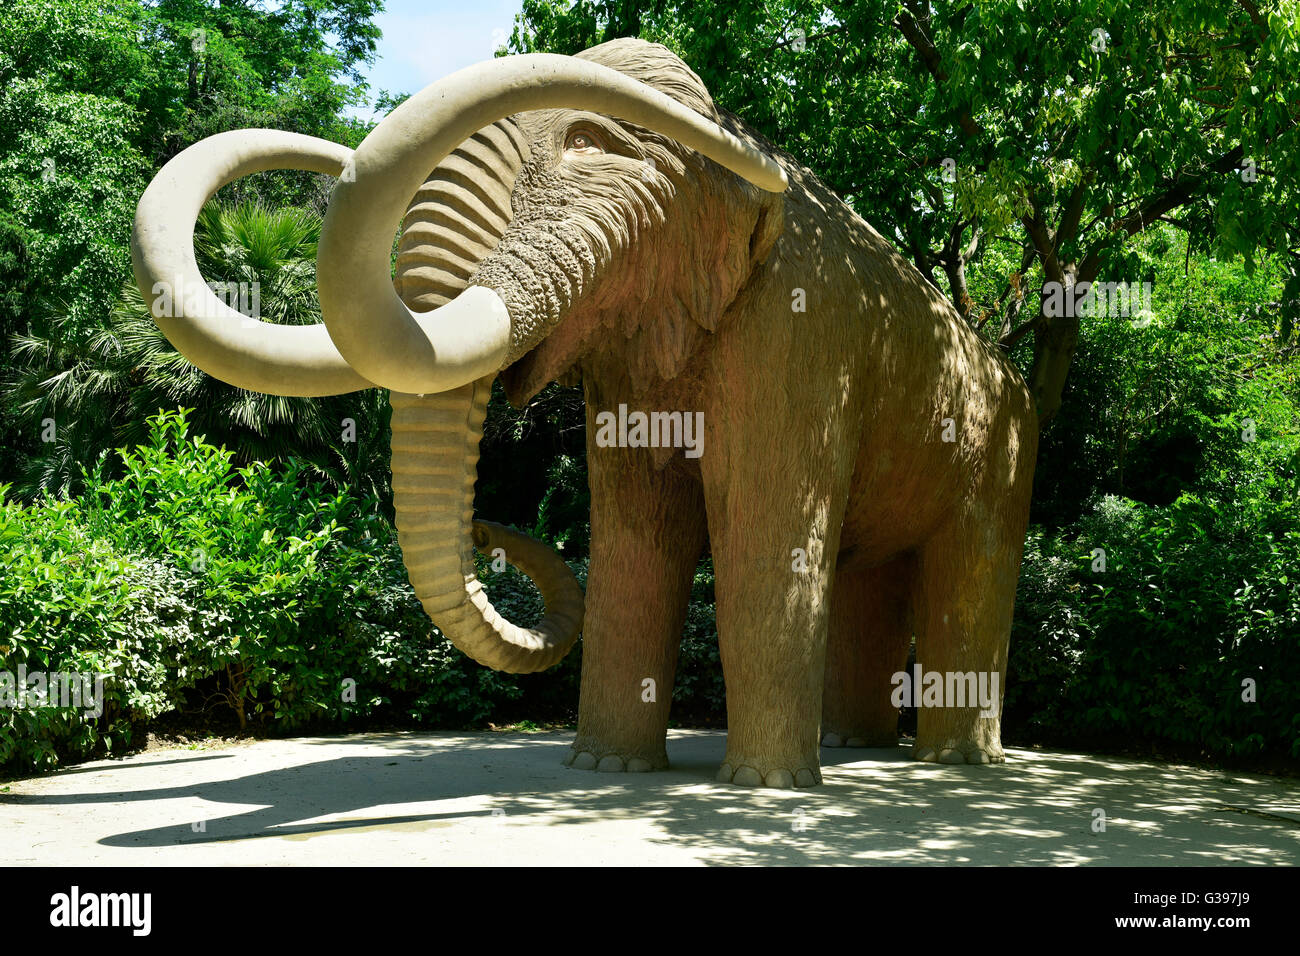 a view of the popular mammoth sculpture, built in 1906, at Parc de la Ciutadella park in Barcelona, Spain Stock Photo